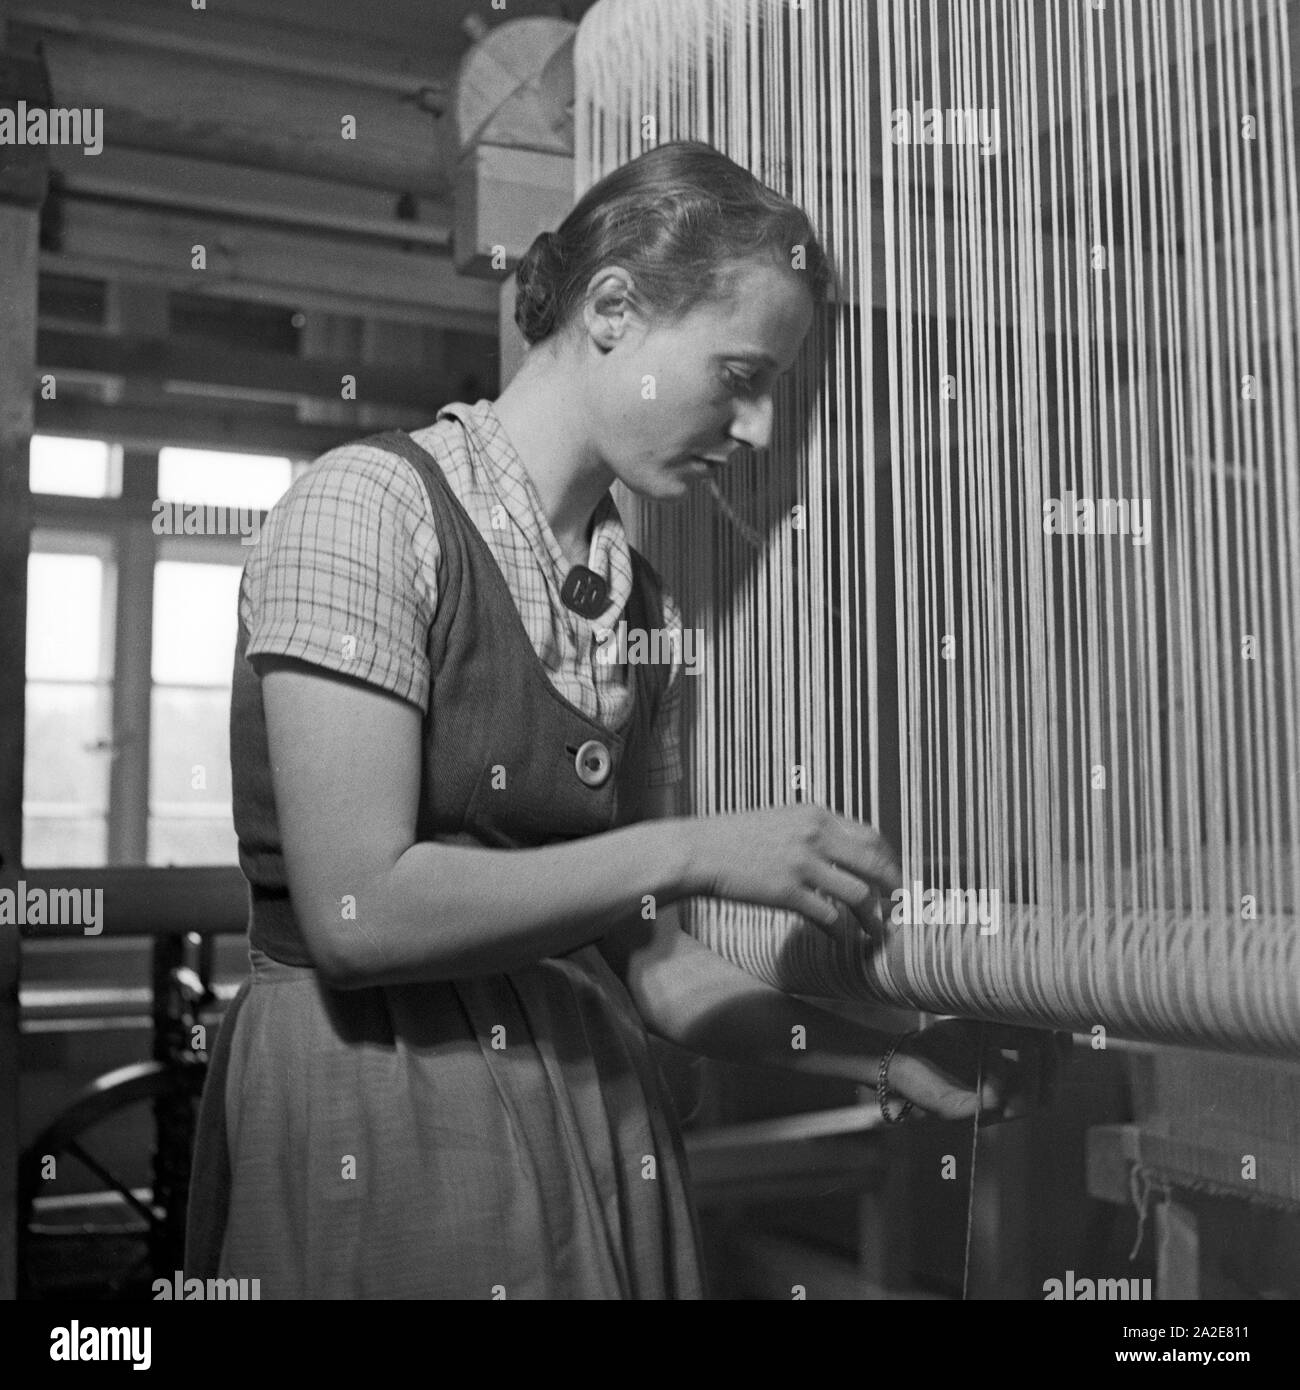 Eine Frau un einem Webstuhl in der in der Kurmark Webschule Sommerfeld, Deutschland 1930er Jahre. Una mujer en un telar en la escuela para tejer en Sommerfeld, Alemania 1930. Foto de stock